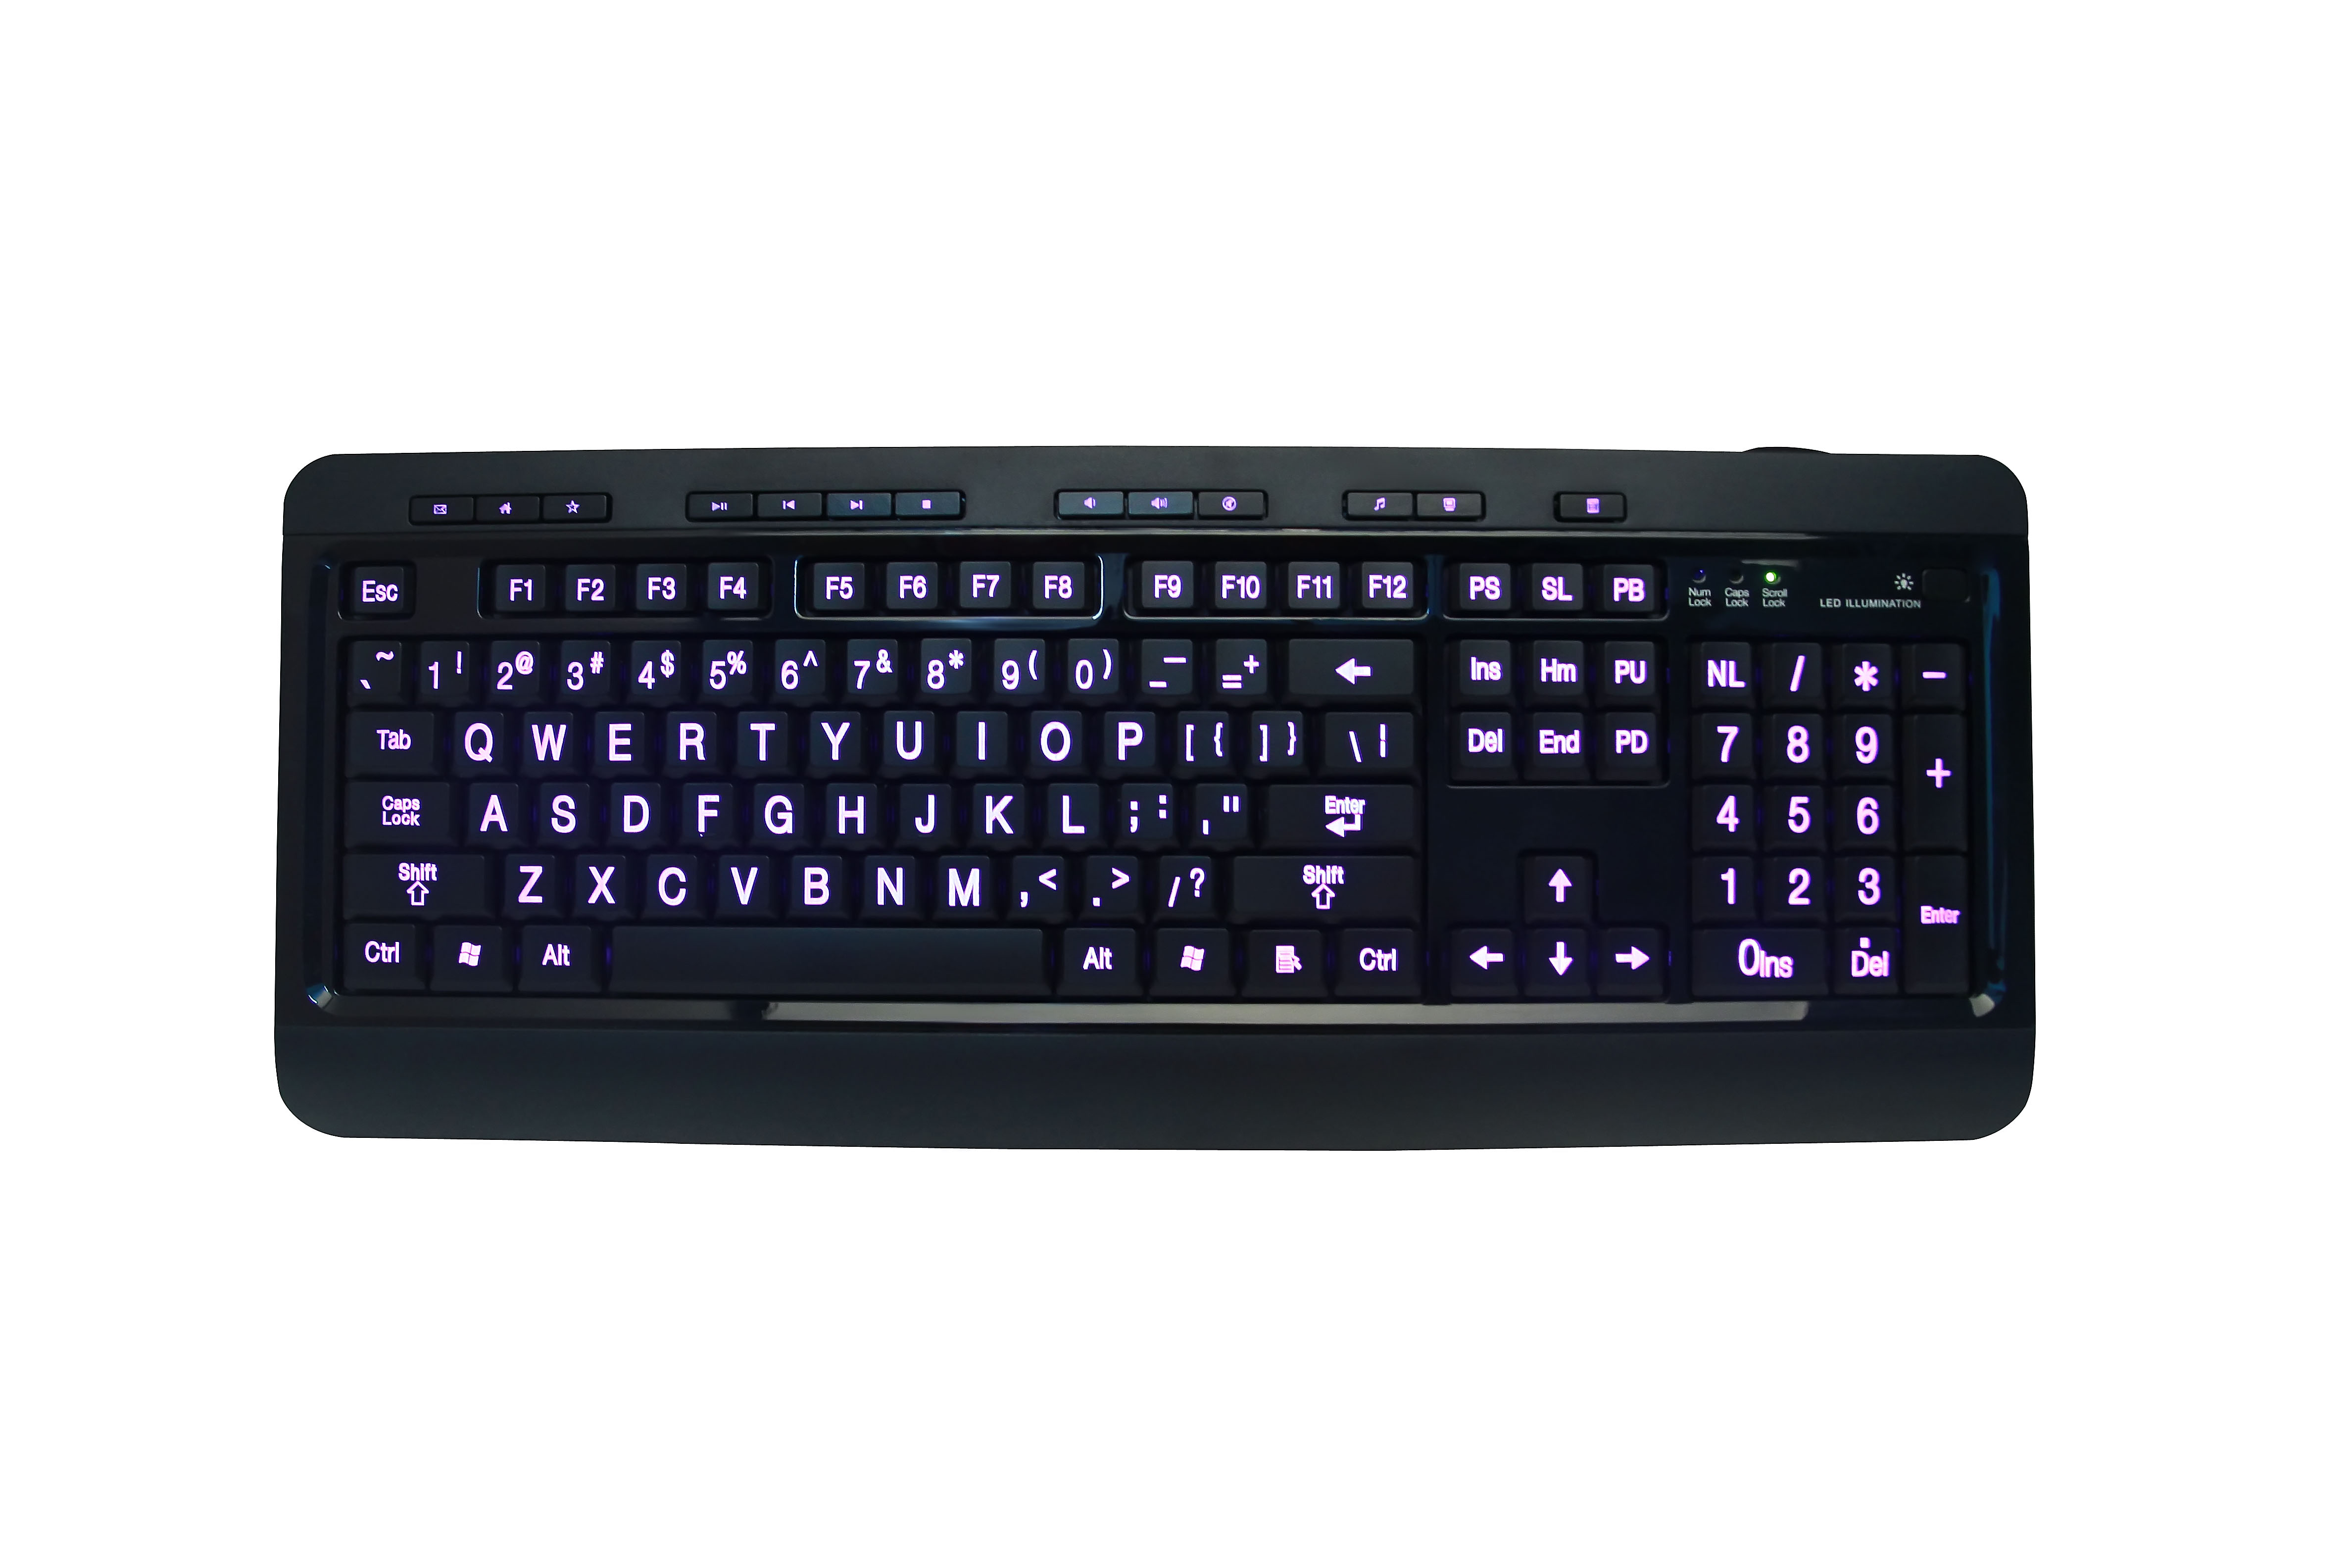 Tri-Color Backlit Wired Keyboard